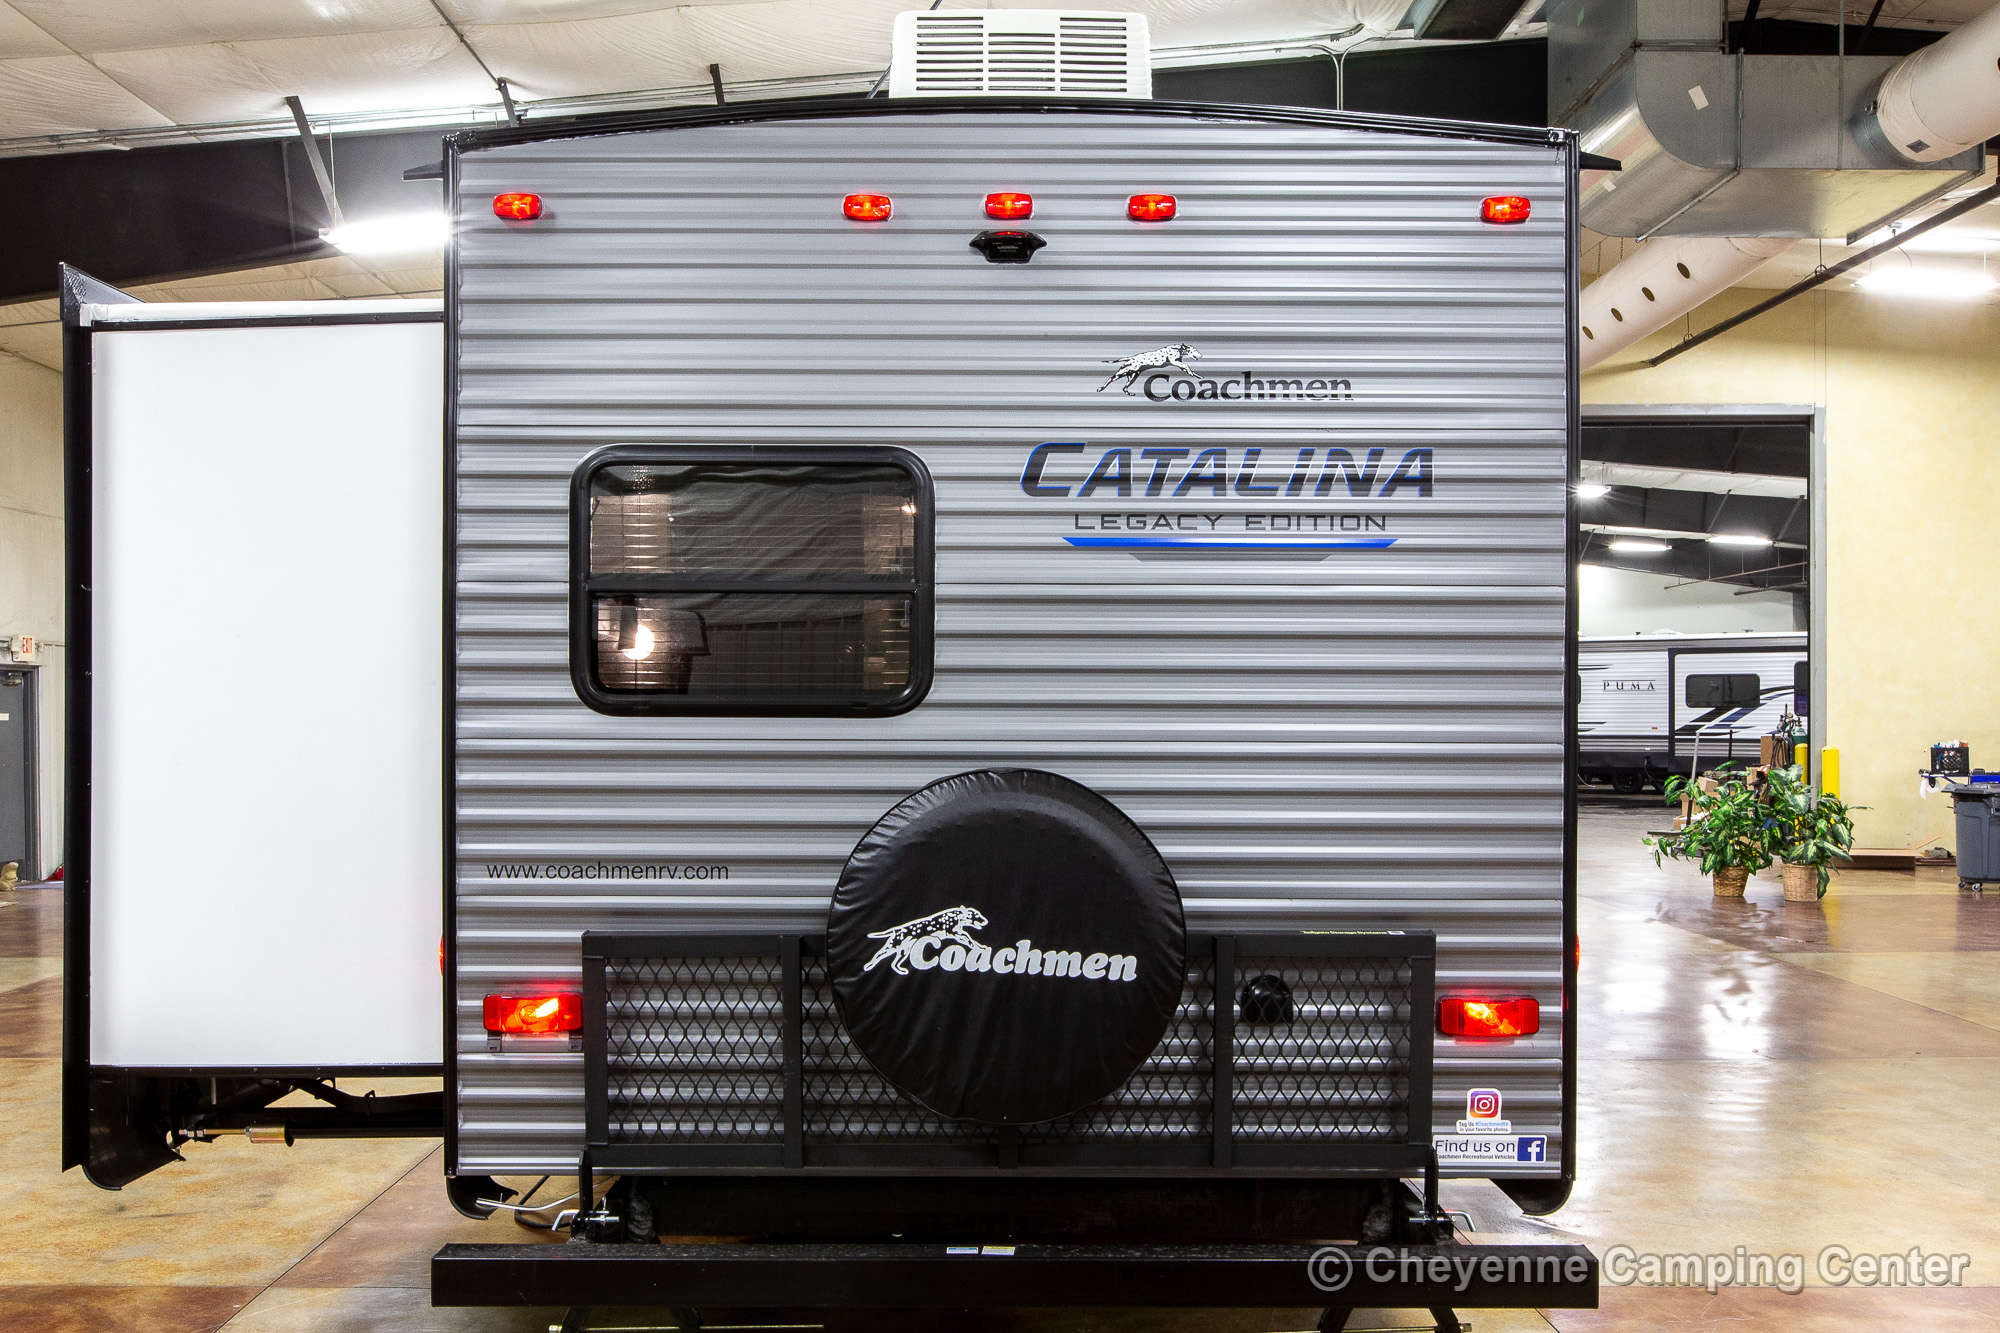 2022 Coachmen Catalina Legacy Edition 323BHDSCK Bunkhouse Travel Trailer Exterior Image